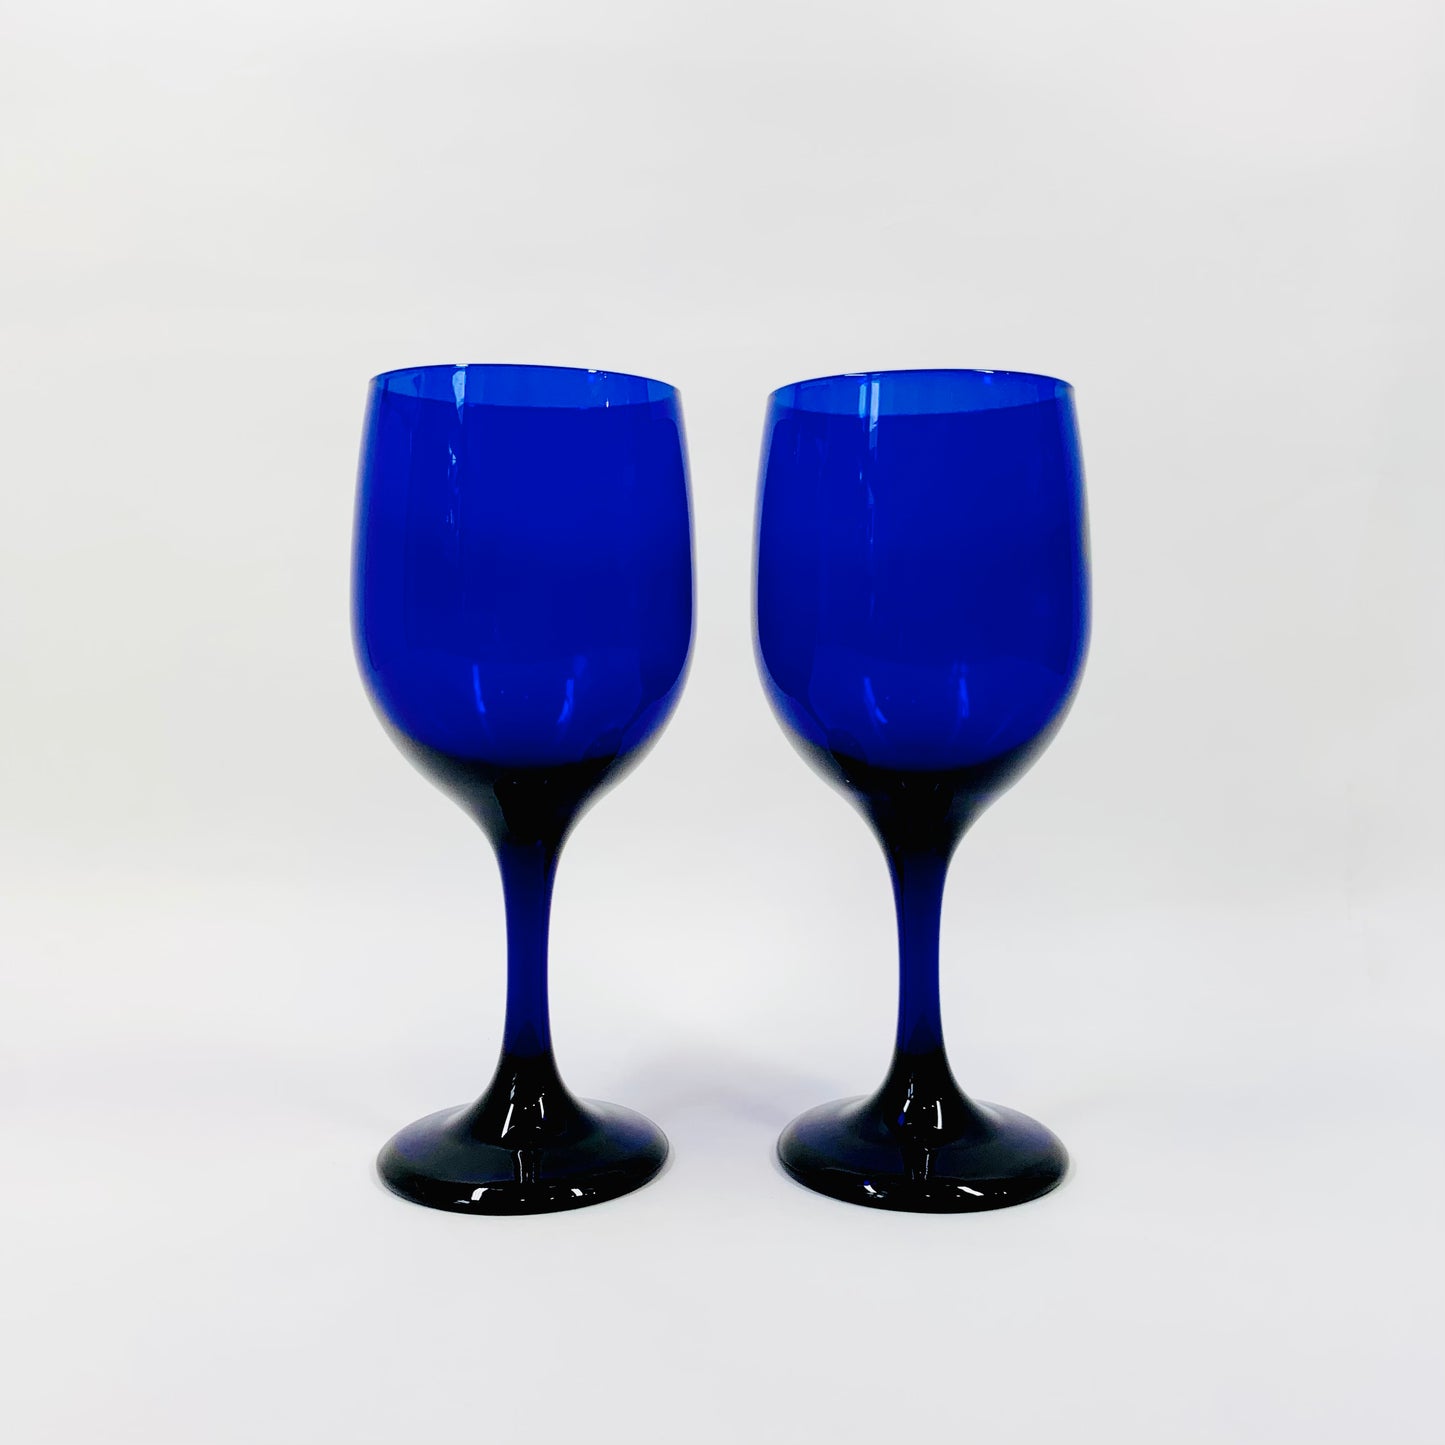 BLUE LIBBEY WINE GLASSES